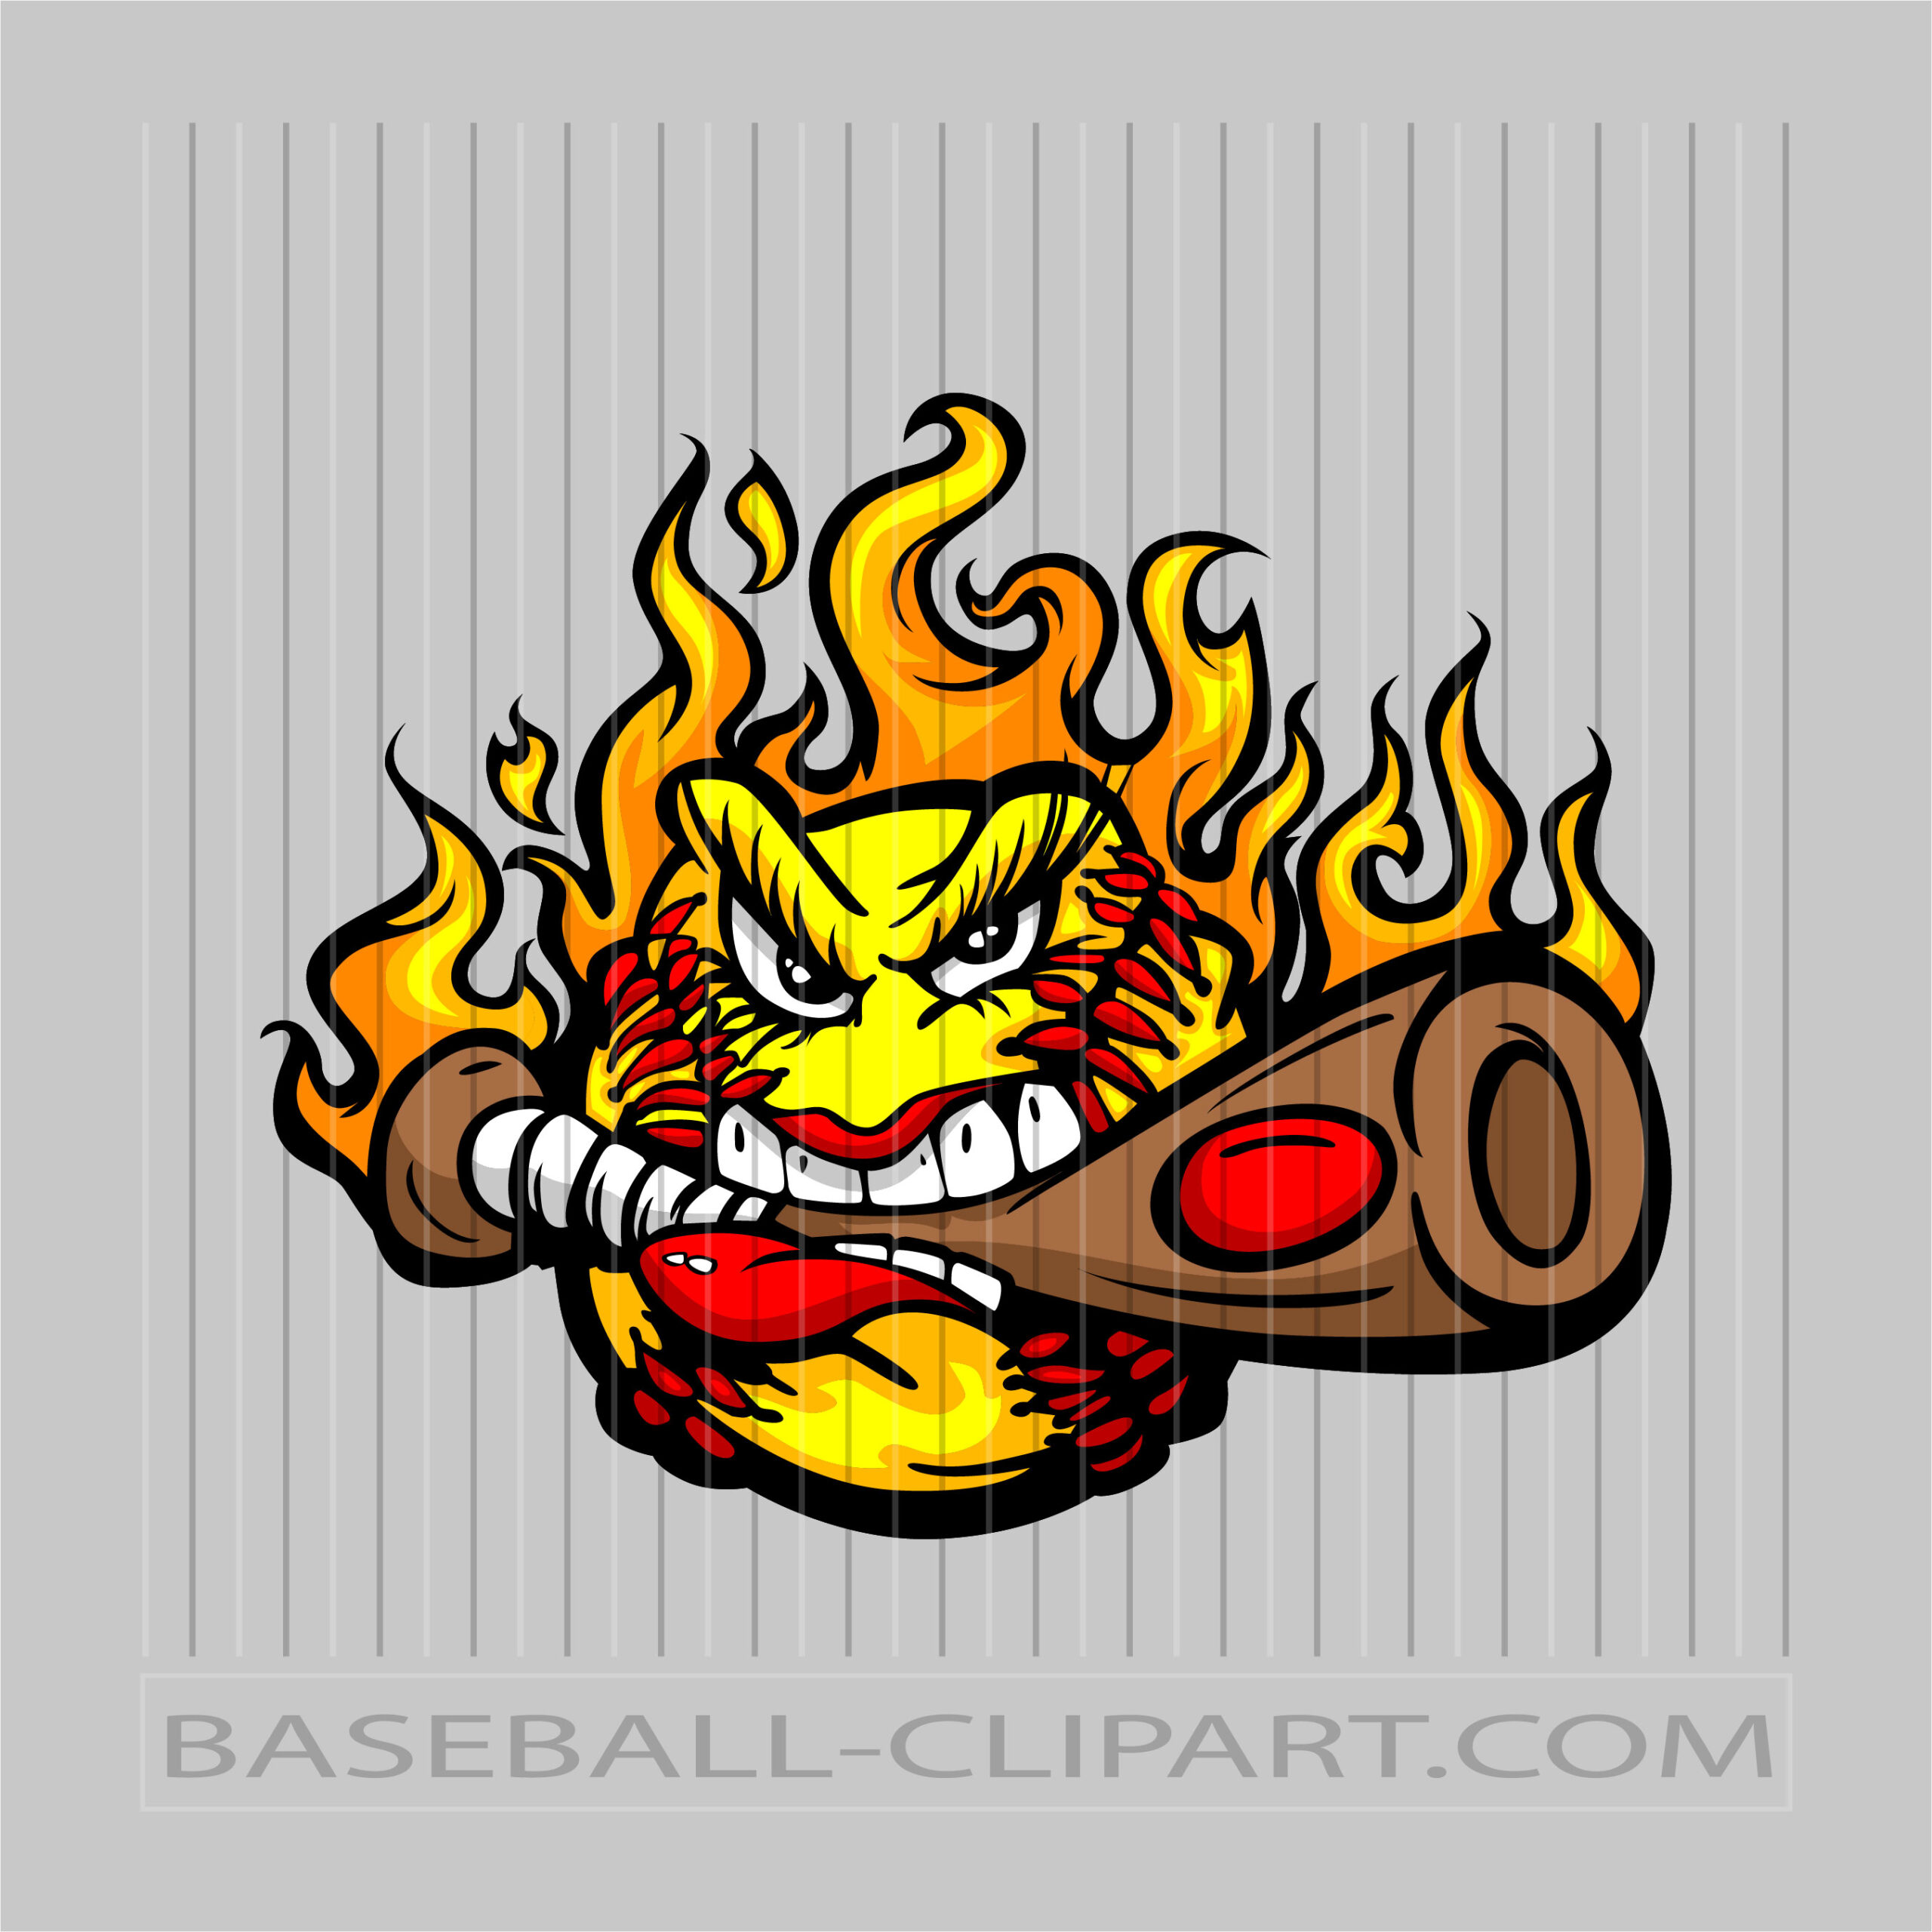 Softball Flaming Cartoon